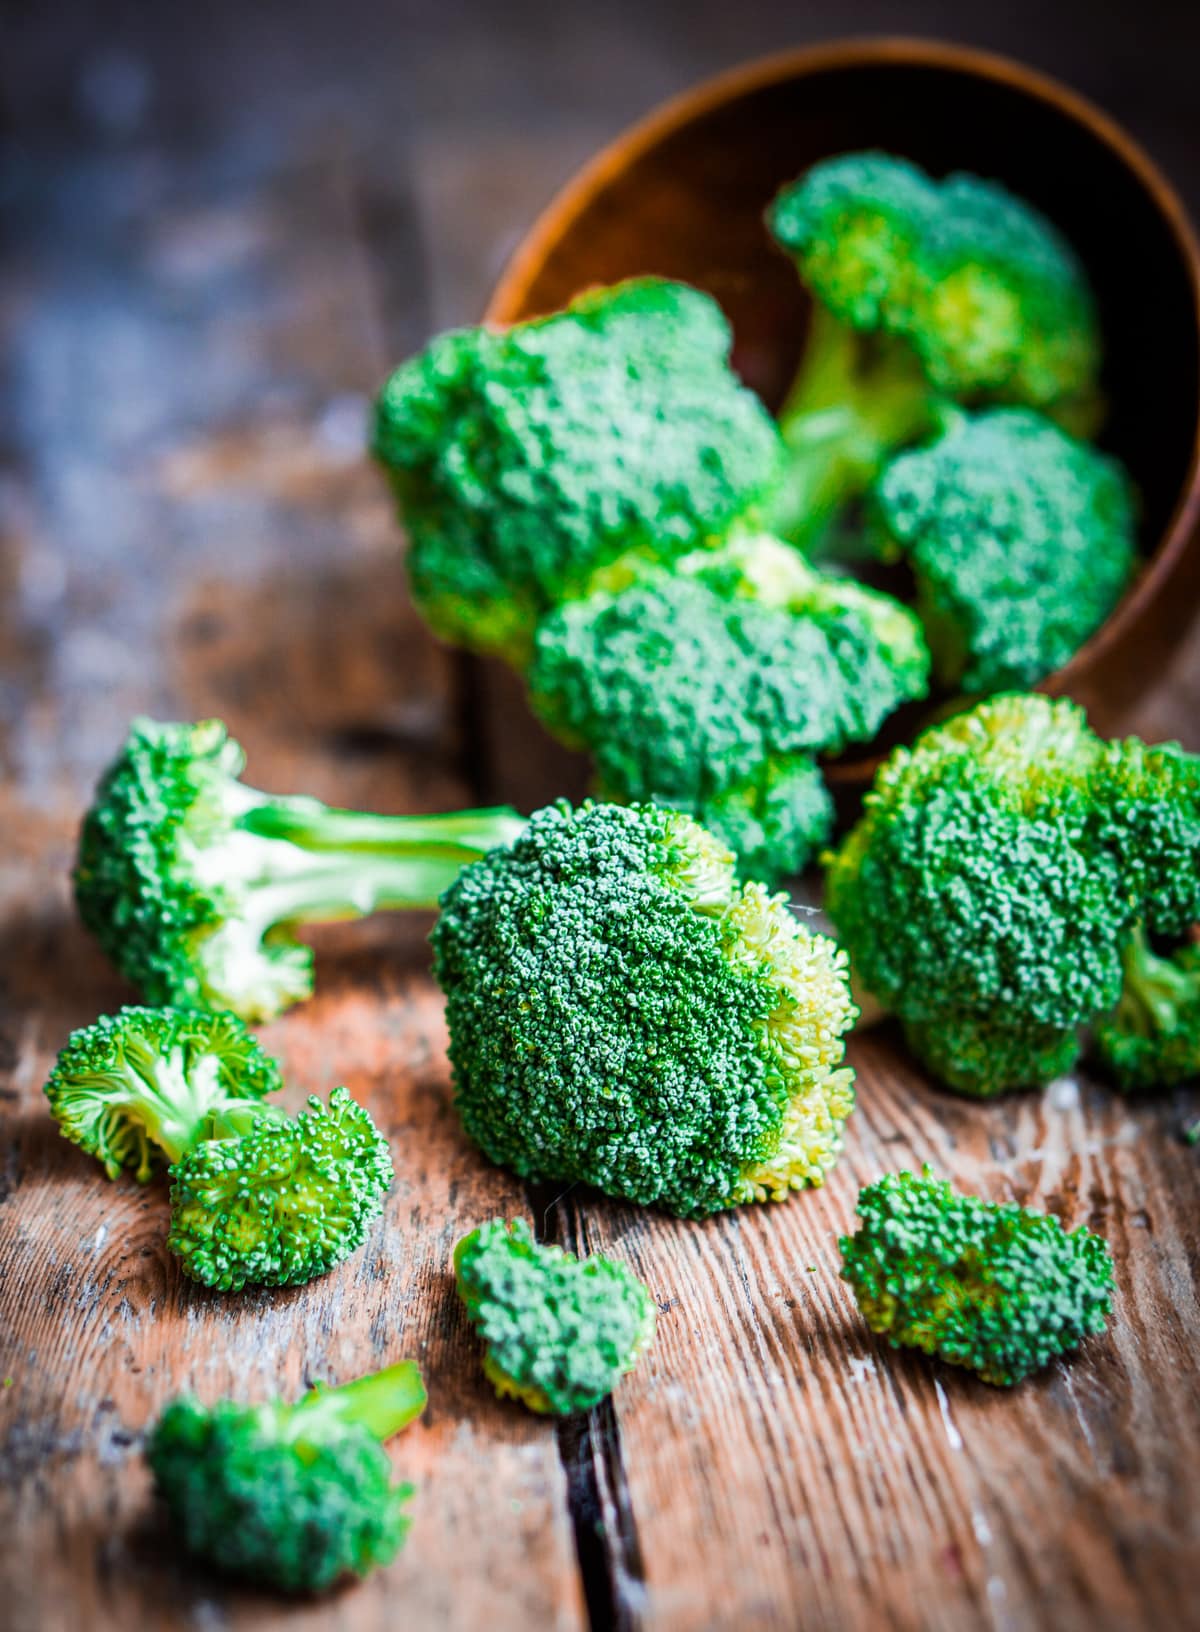 Broccoli for Bone Health